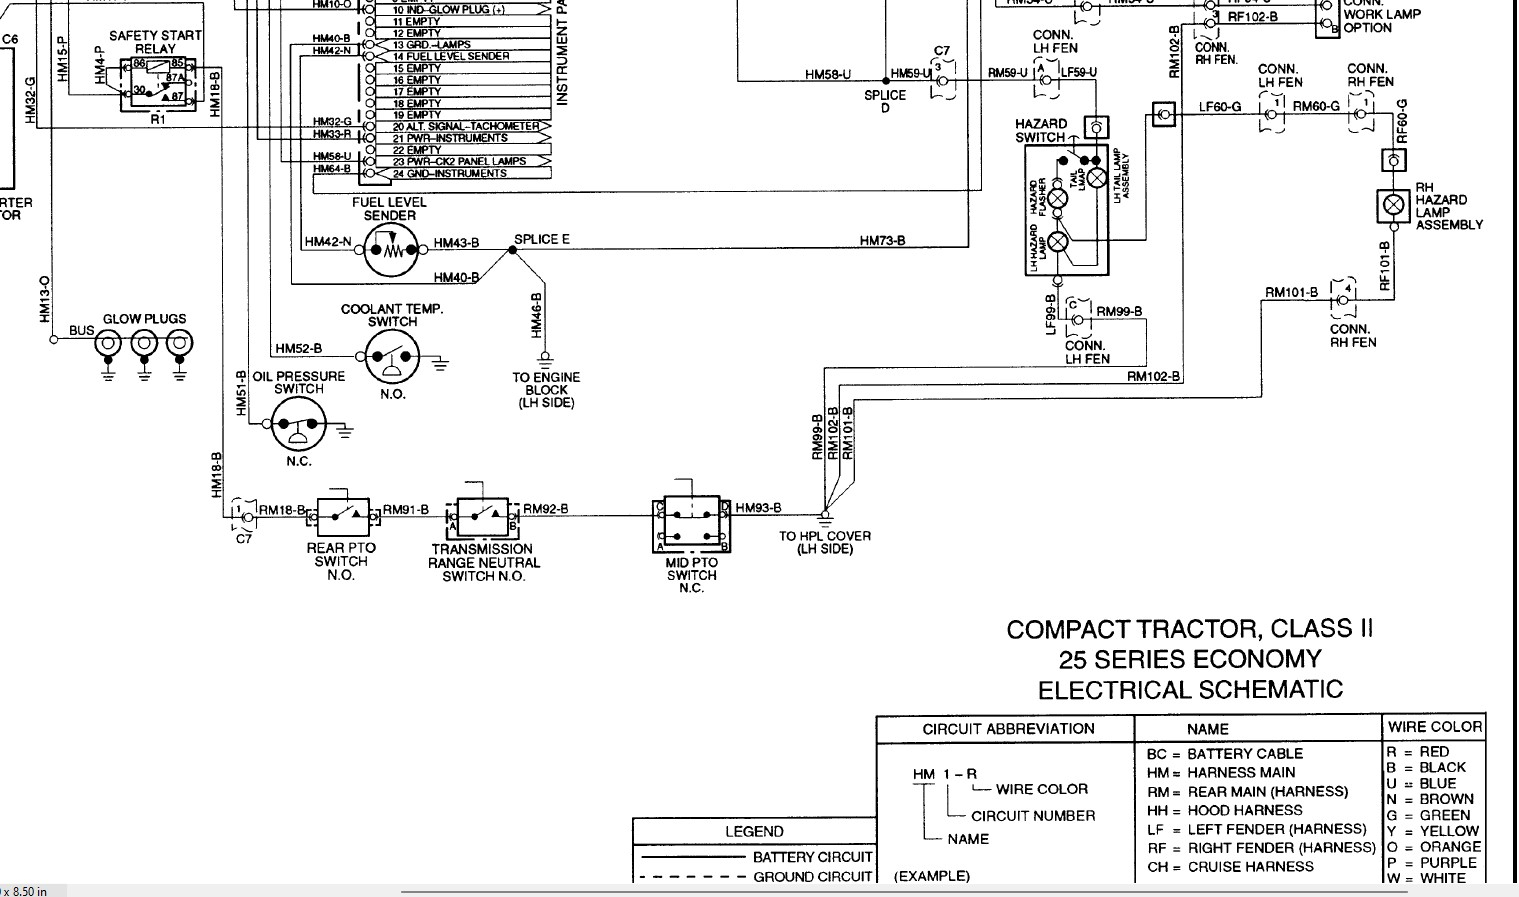 25 Series Electrical Schematic - Snip.jpg